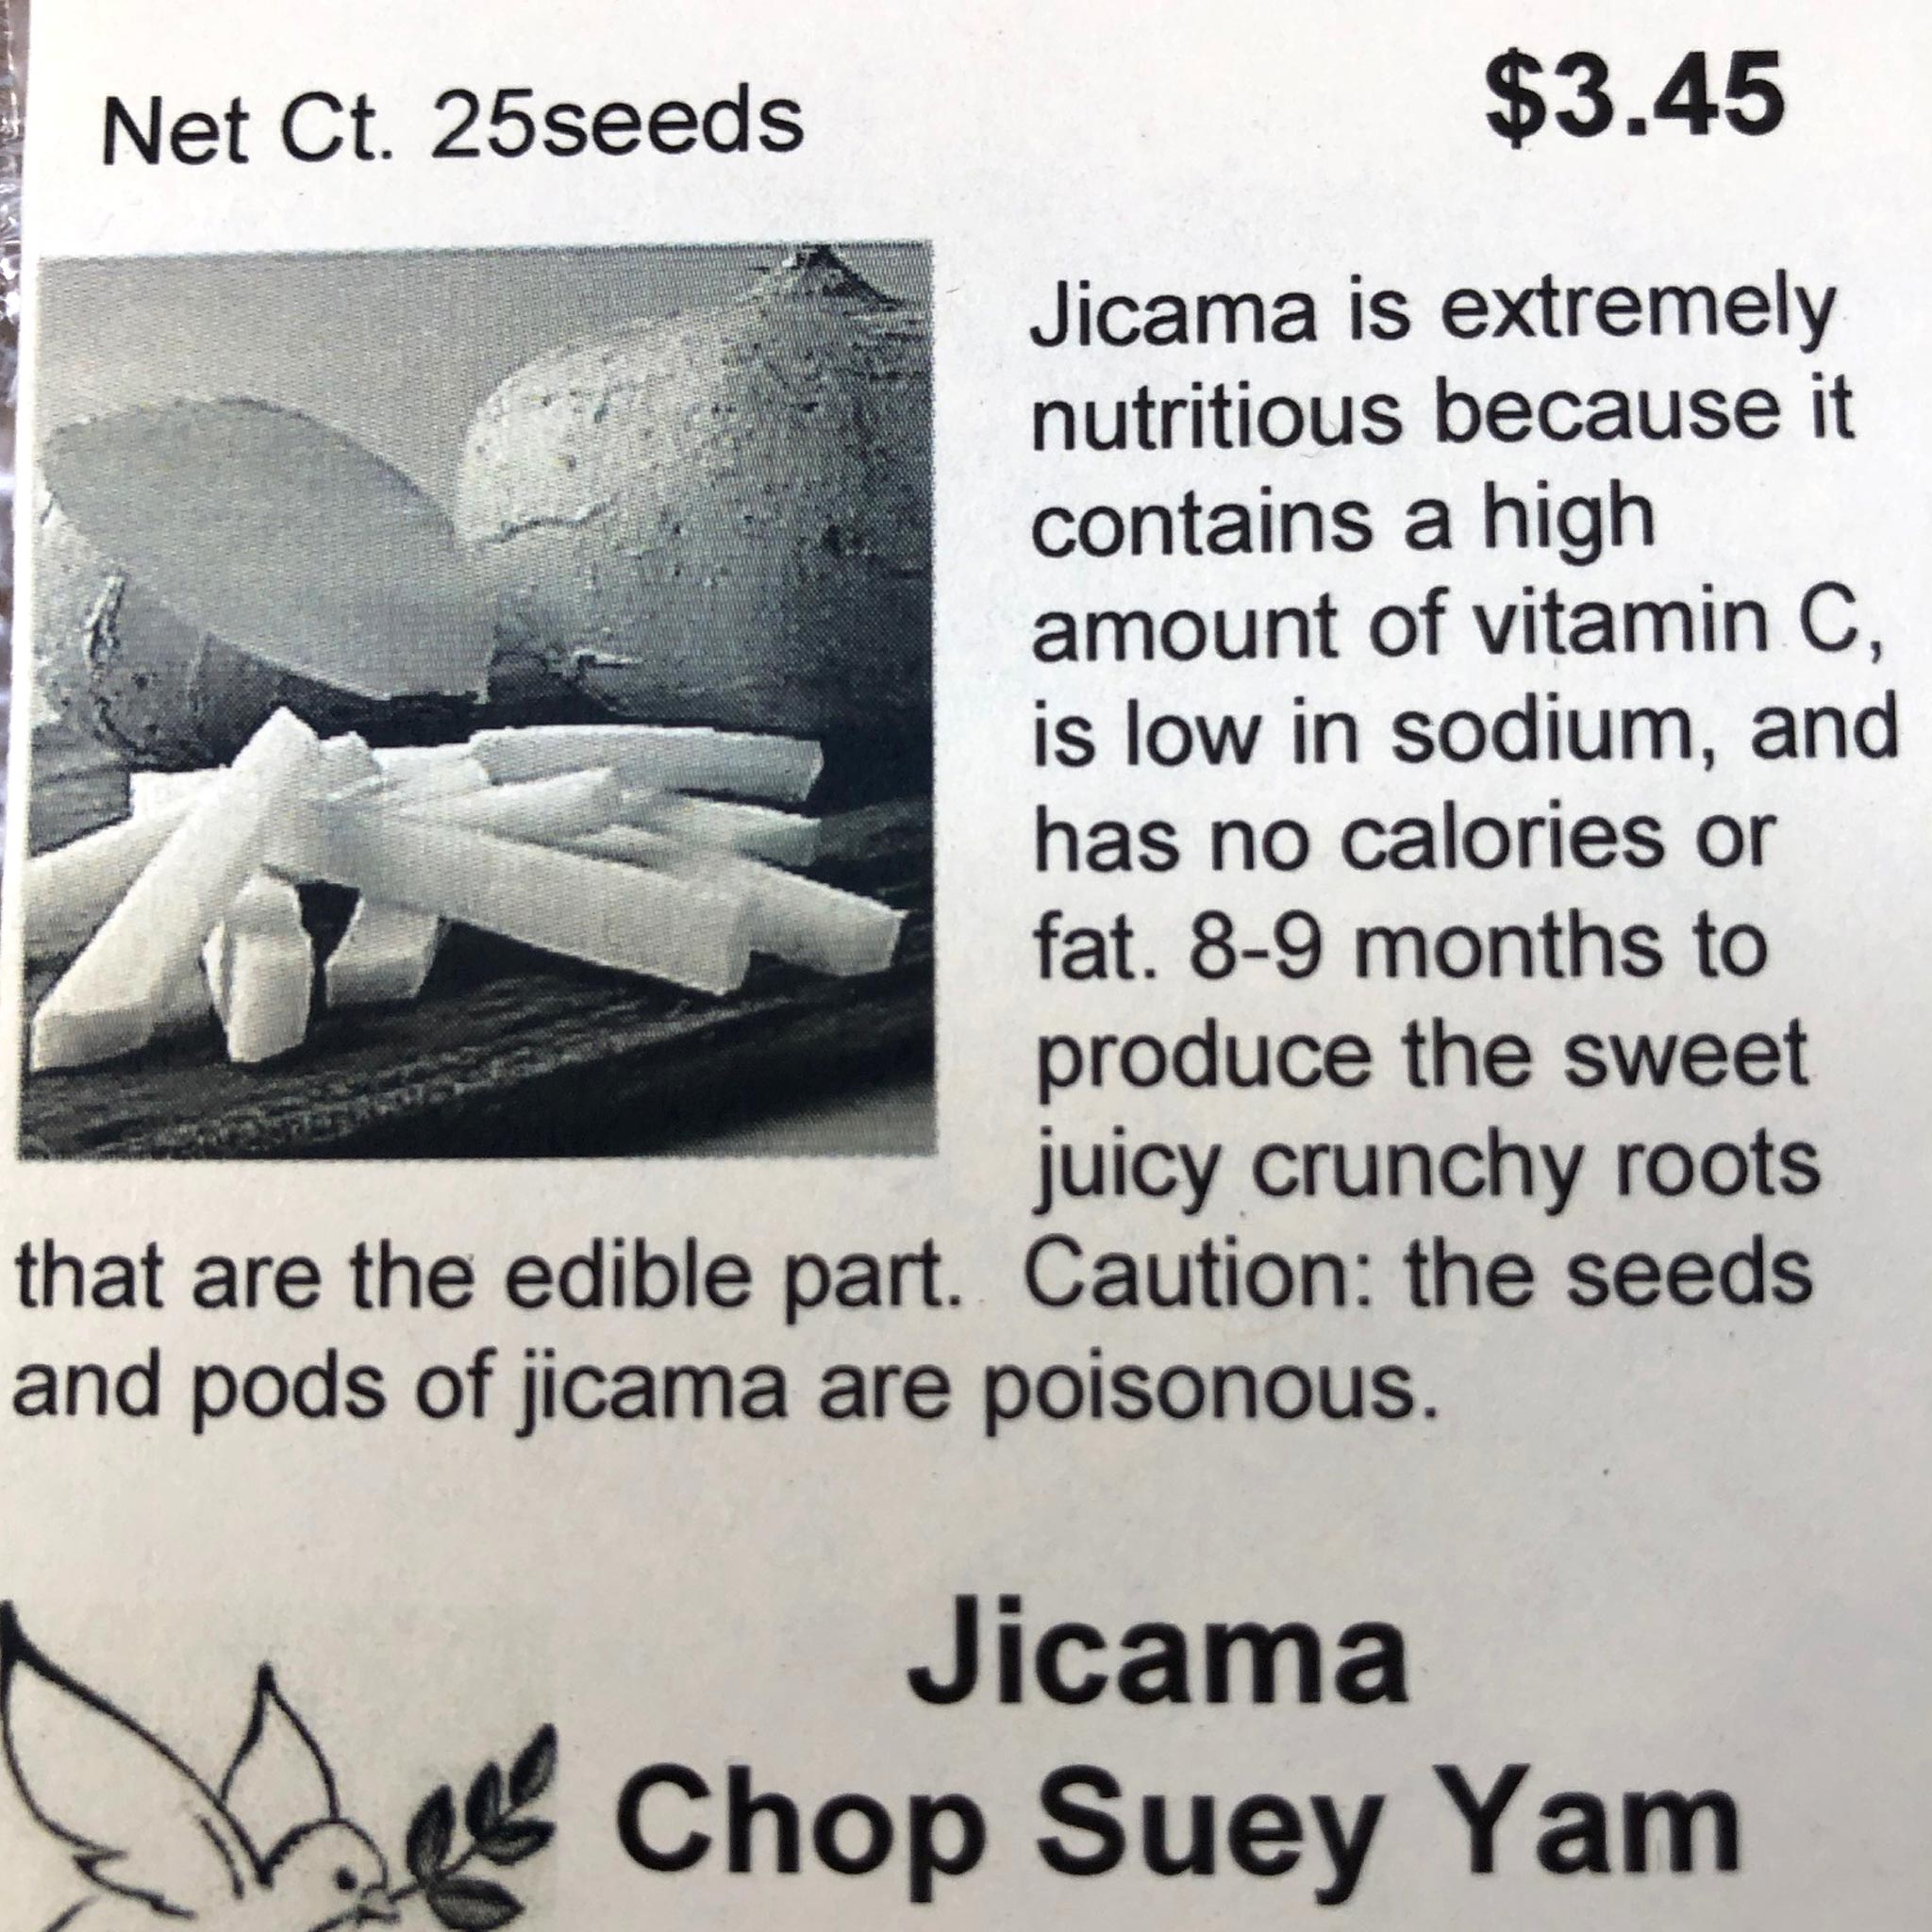 Jicama, Chop Suey Yam